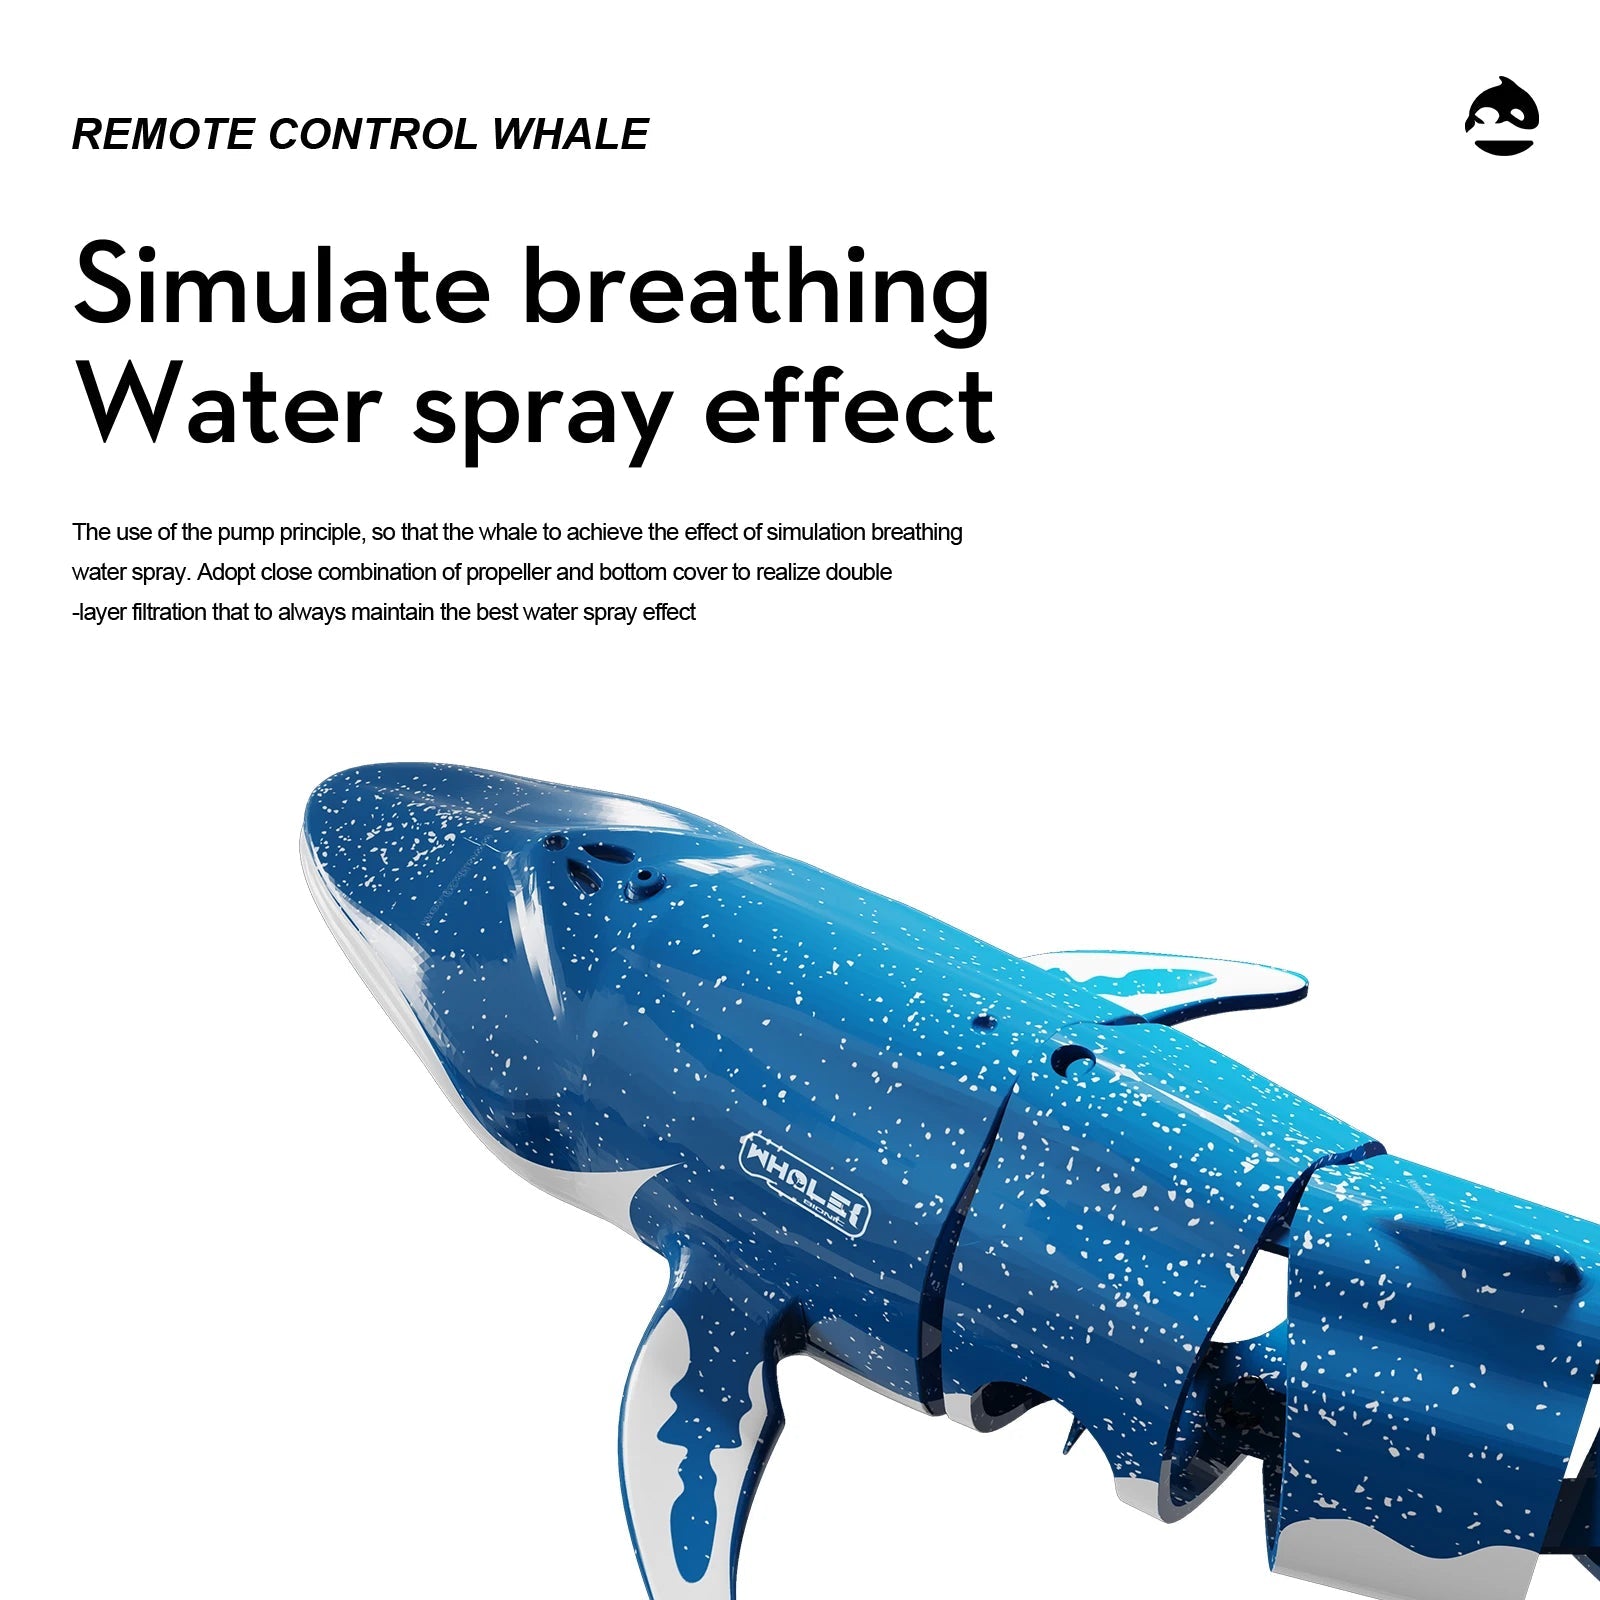 Whale Spray Speed RC Submarine Underwater Diving Remote Control Boat - ToylandEU